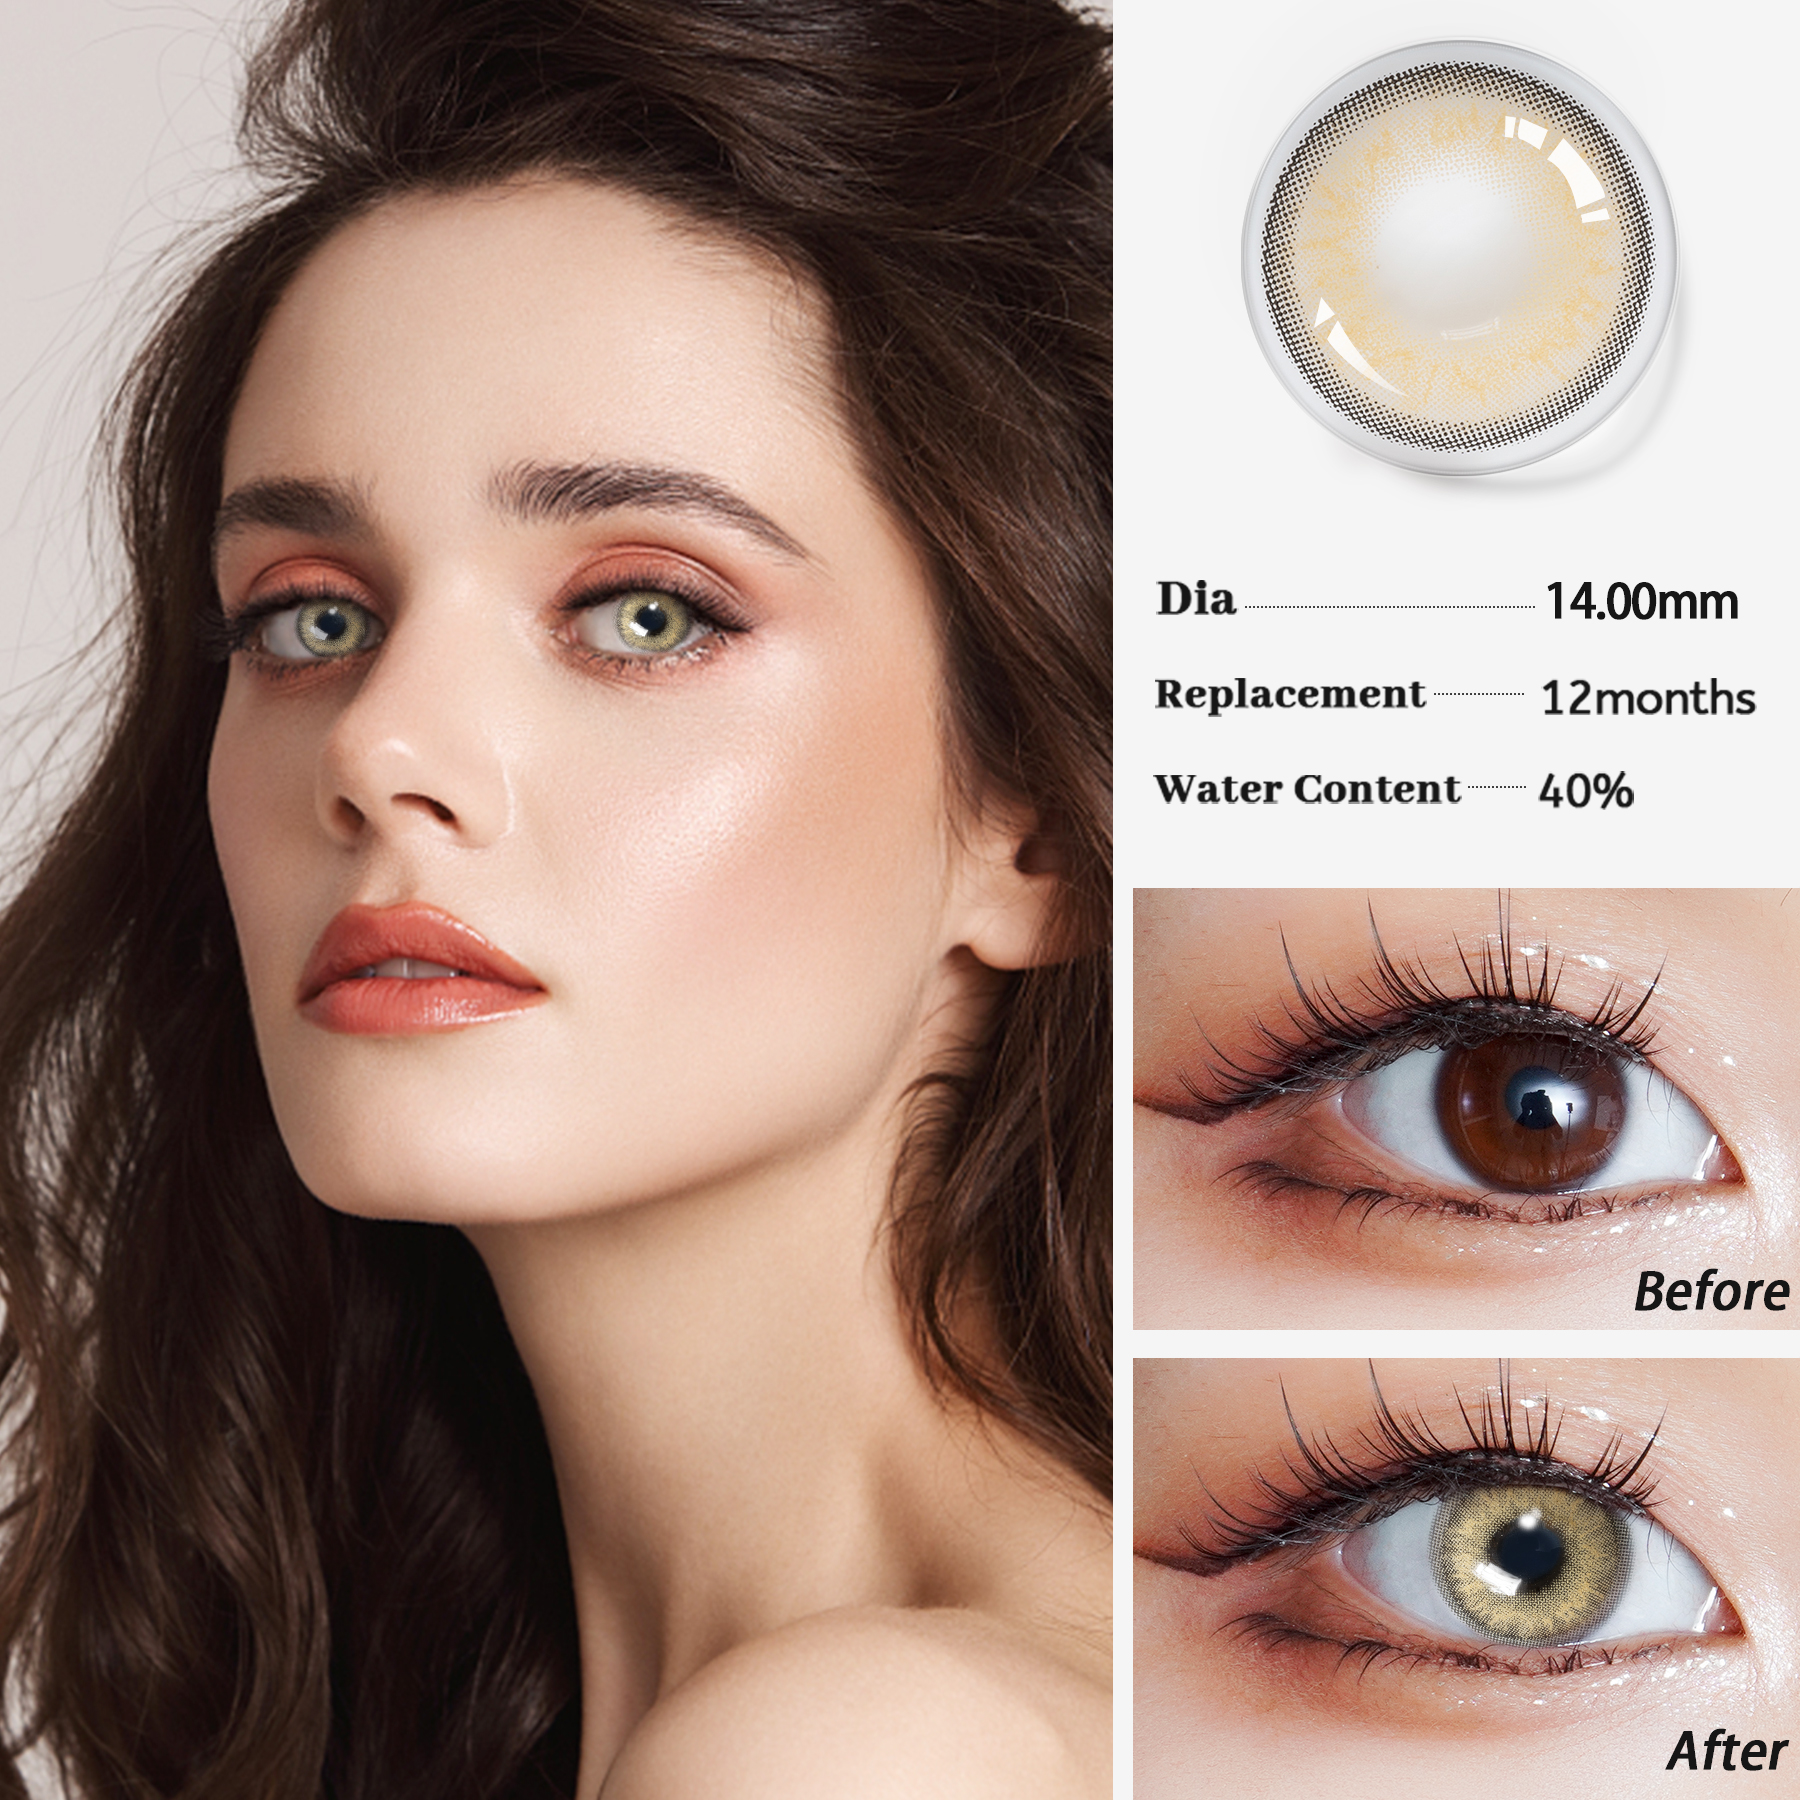 HIMALAYA Soft Natural Lens OEM/ODM dbeyes အမှတ်တံဆိပ် လက်ကား မီးခိုးရောင် အပြာရောင် မျက်လုံး မျက်ကပ်မှန် အရောင် မျက်ကပ်မှန်